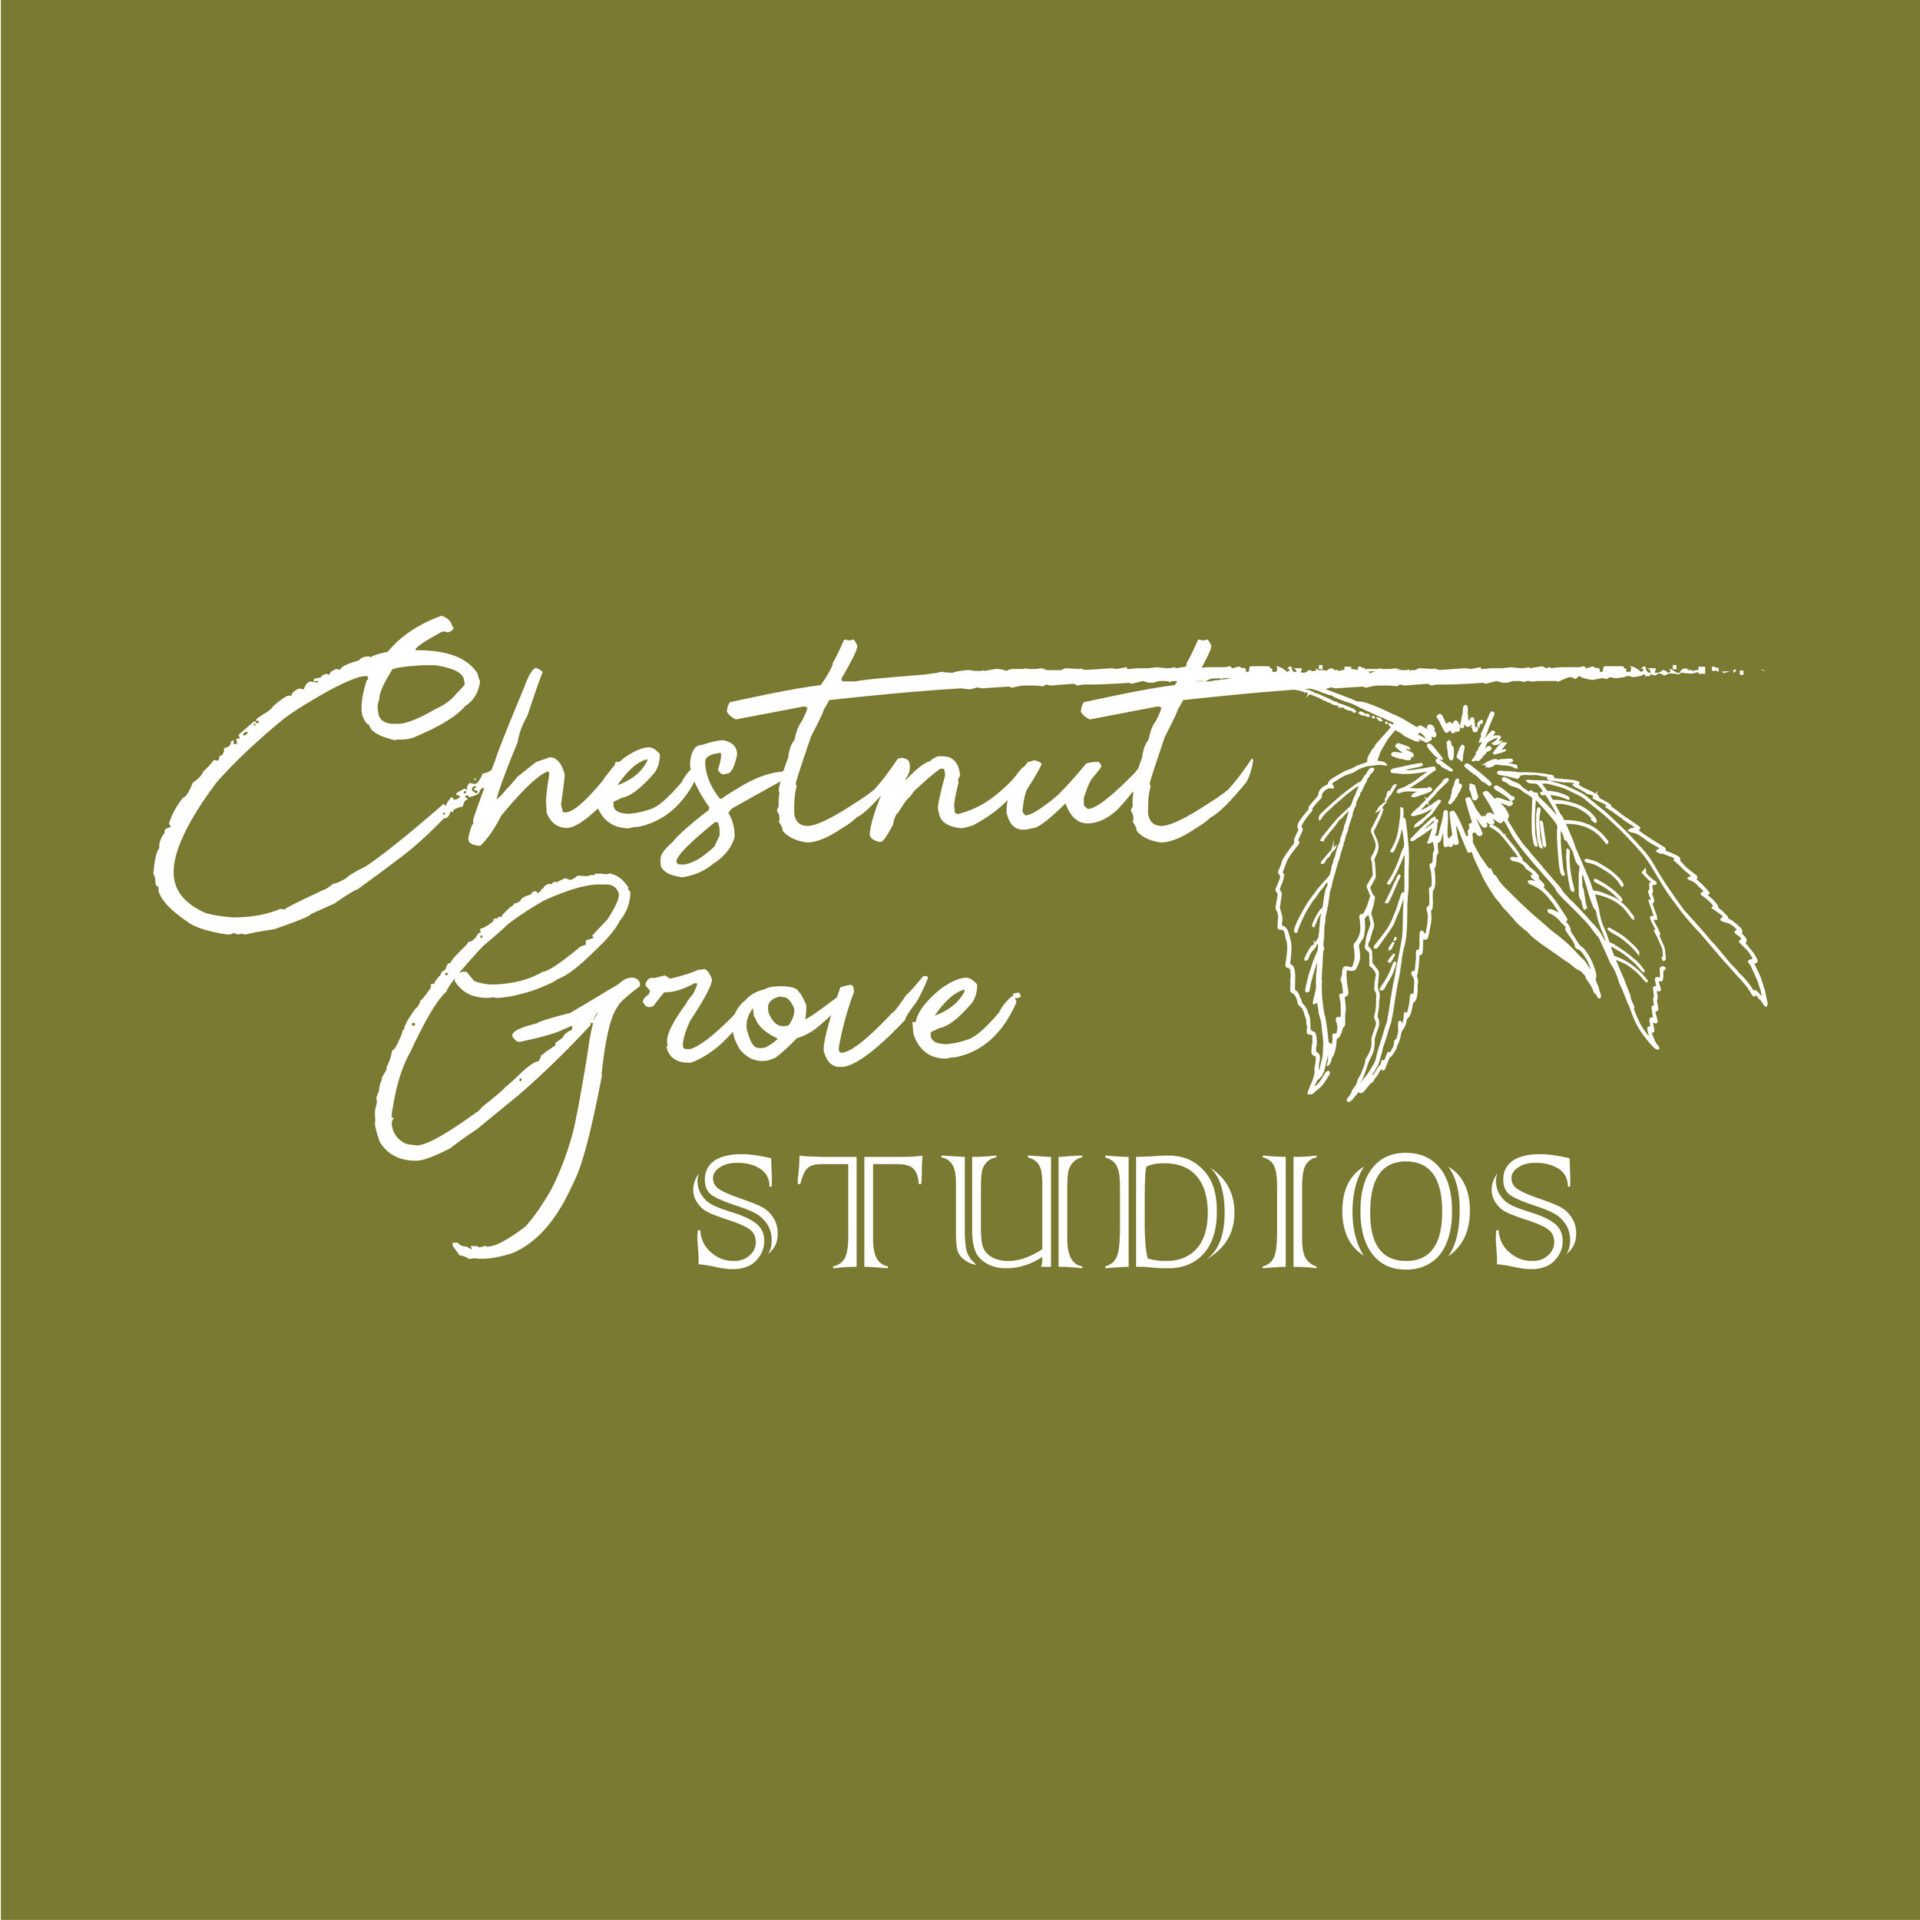 Chestnut Grove Studios